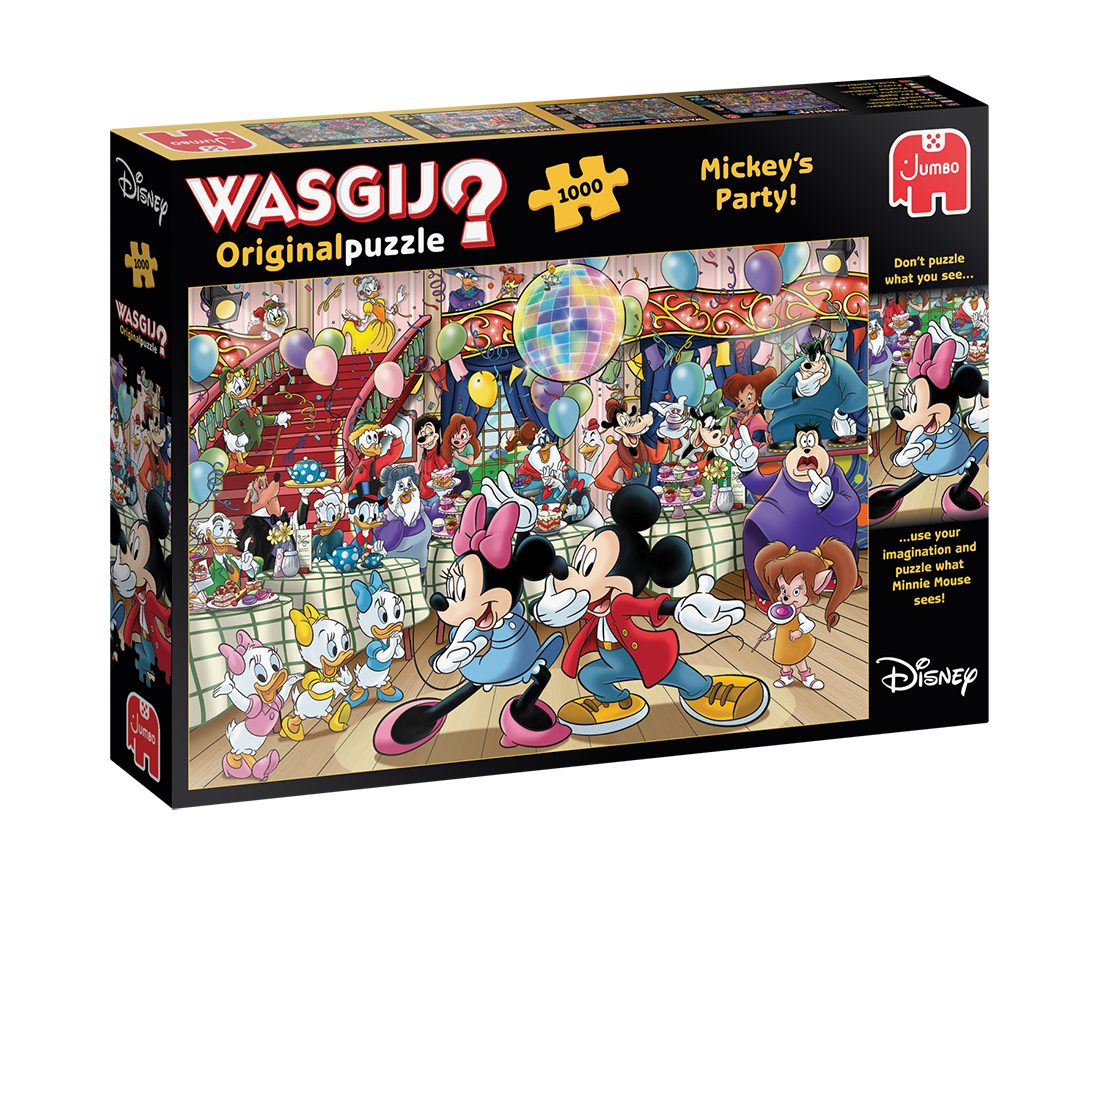 Jumbo Spiele Puzzle 1110100124 Wasgij Original Disneys Mickey Party, 1000 Puzzleteile